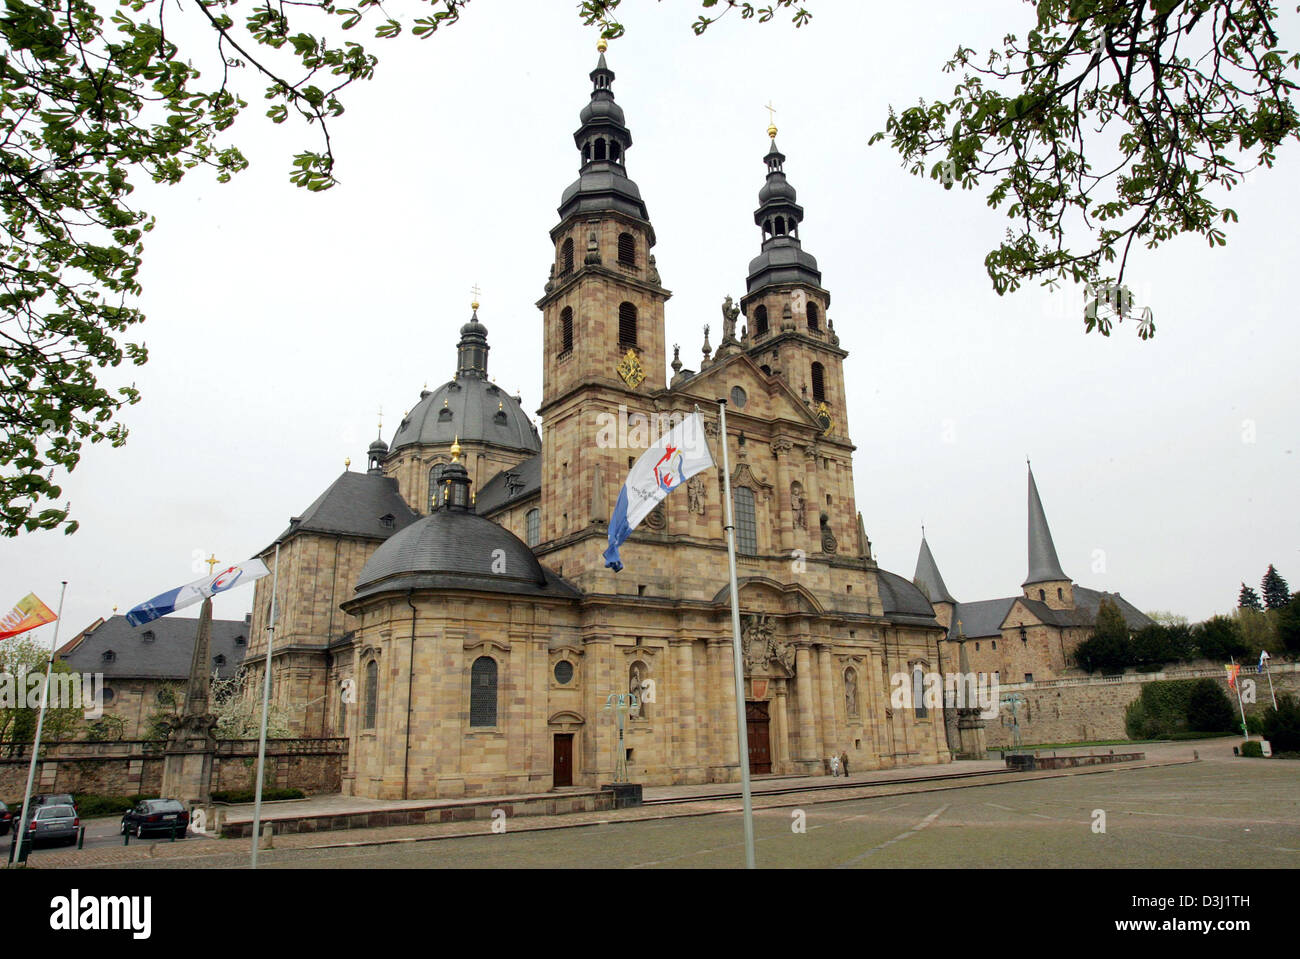 (Dpa) - l'immagine, datata 20 aprile 2005, mostra la cattedrale a Fulda, Germania. Foto Stock